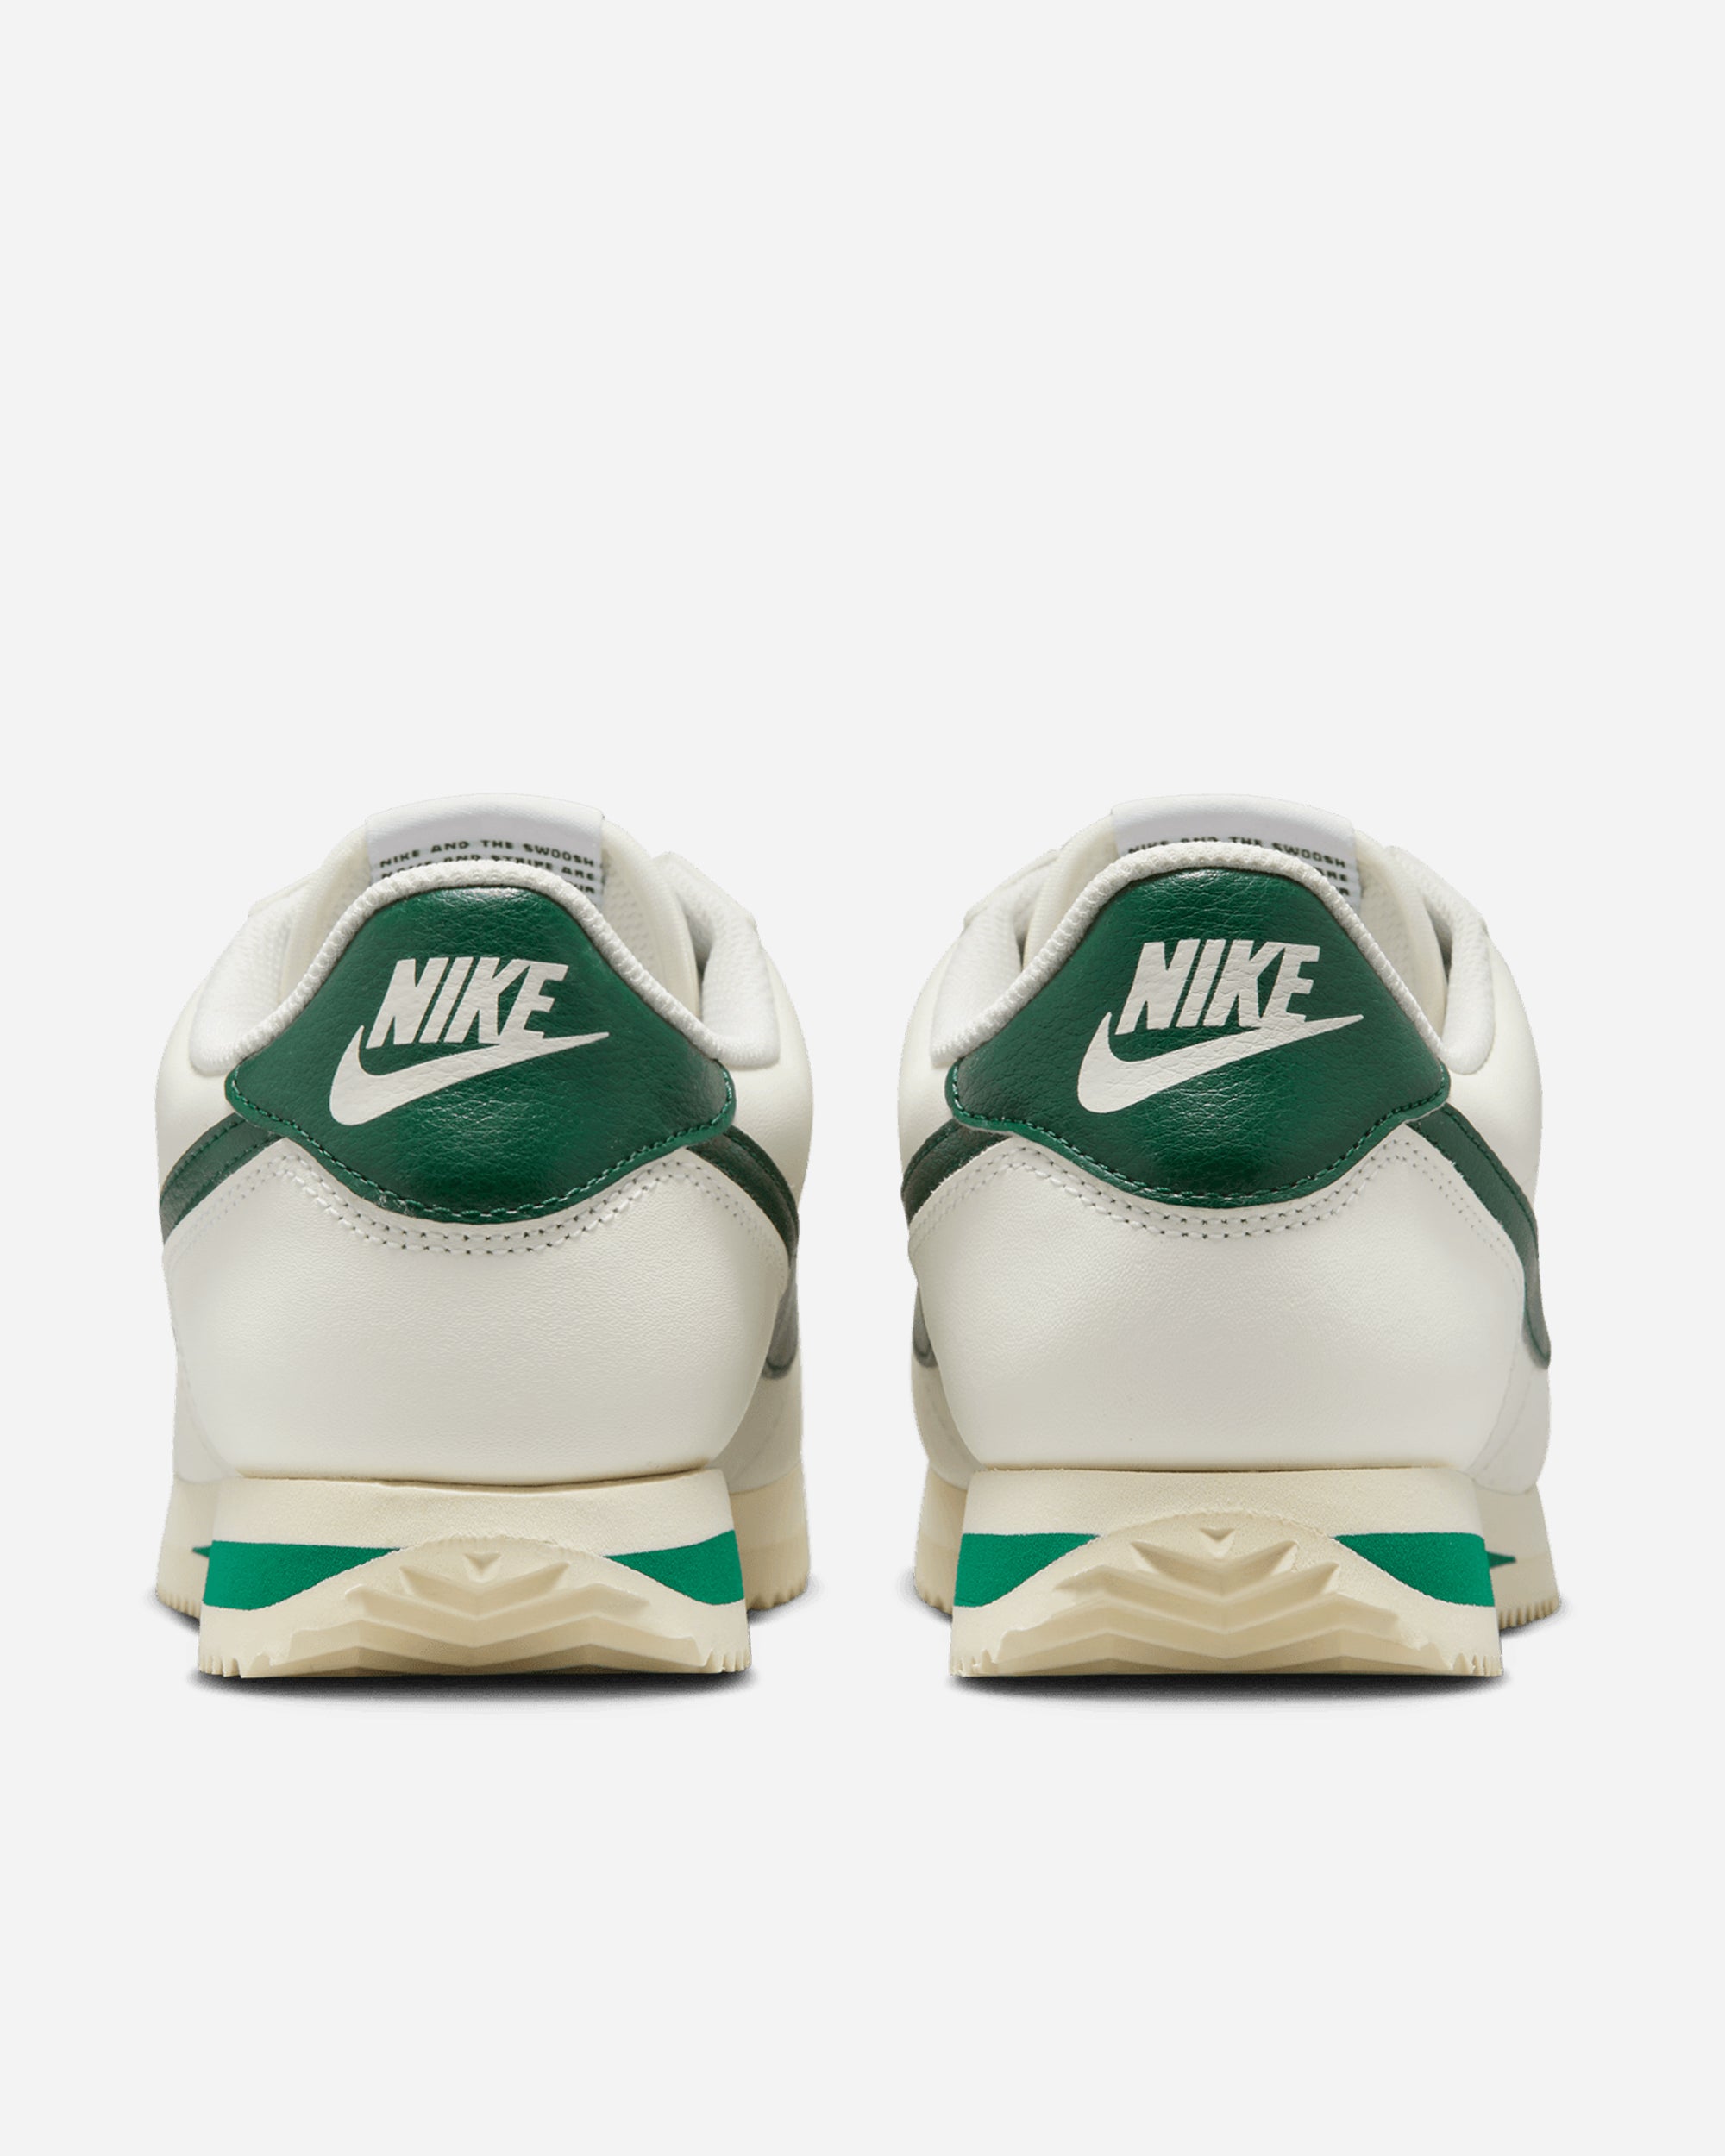 Nike Cortez 'Gorge Green' SAIL/GORGE GREEN-MALACHITE DN1791-101